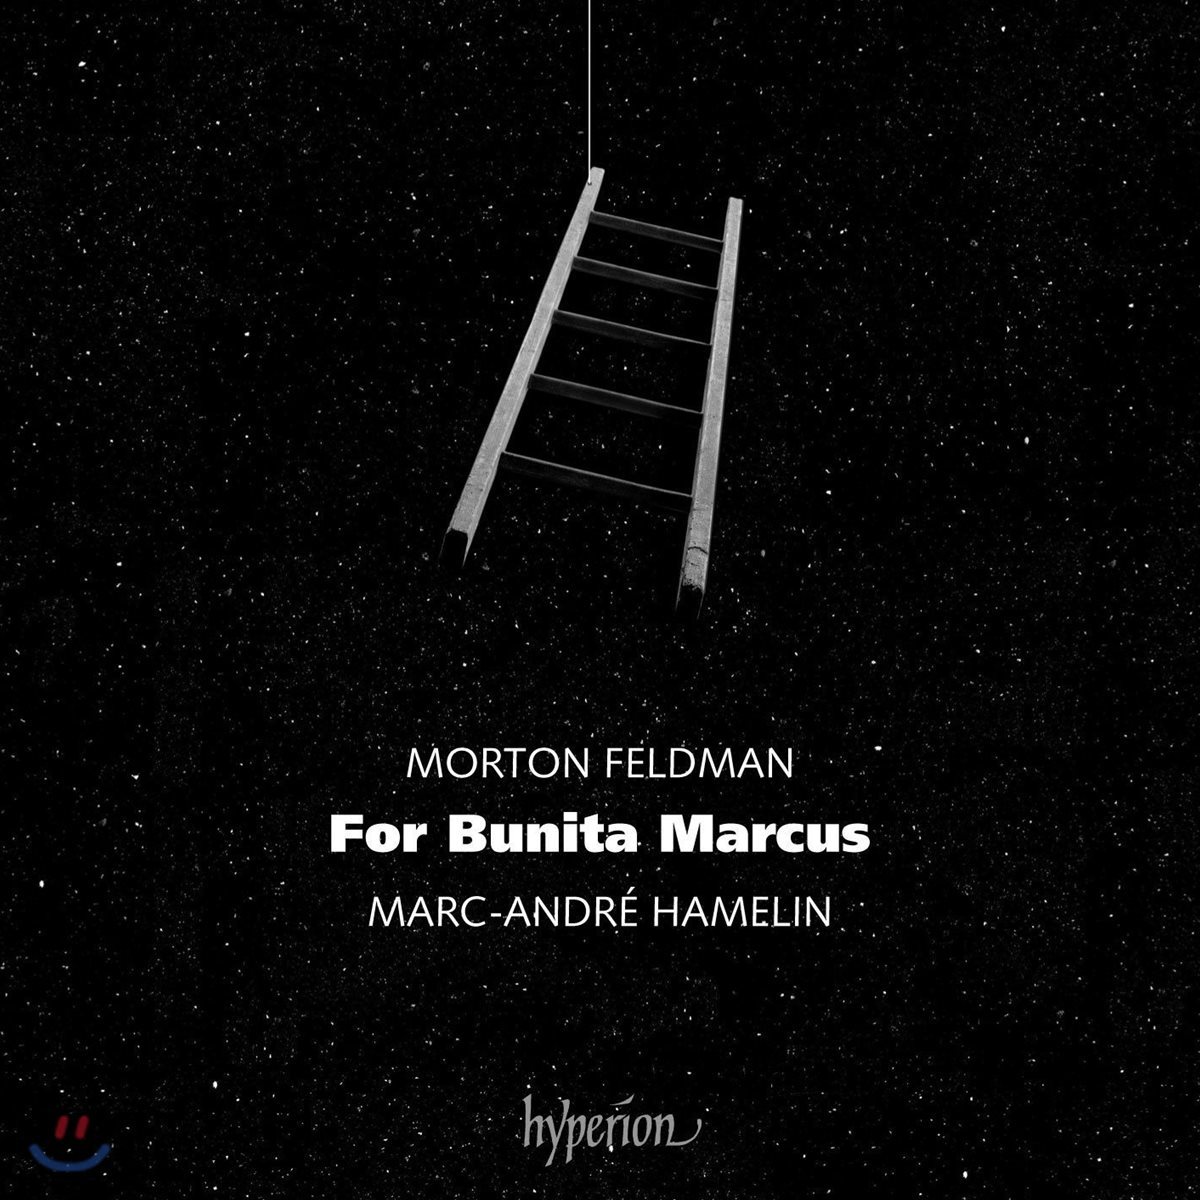 Marc-Andre Hamelin 모튼 펠드만: 버니타 마커스를 위해 - 마르크-앙드레 아믈랭 (Morton Feldman: For Bunita Marcus)